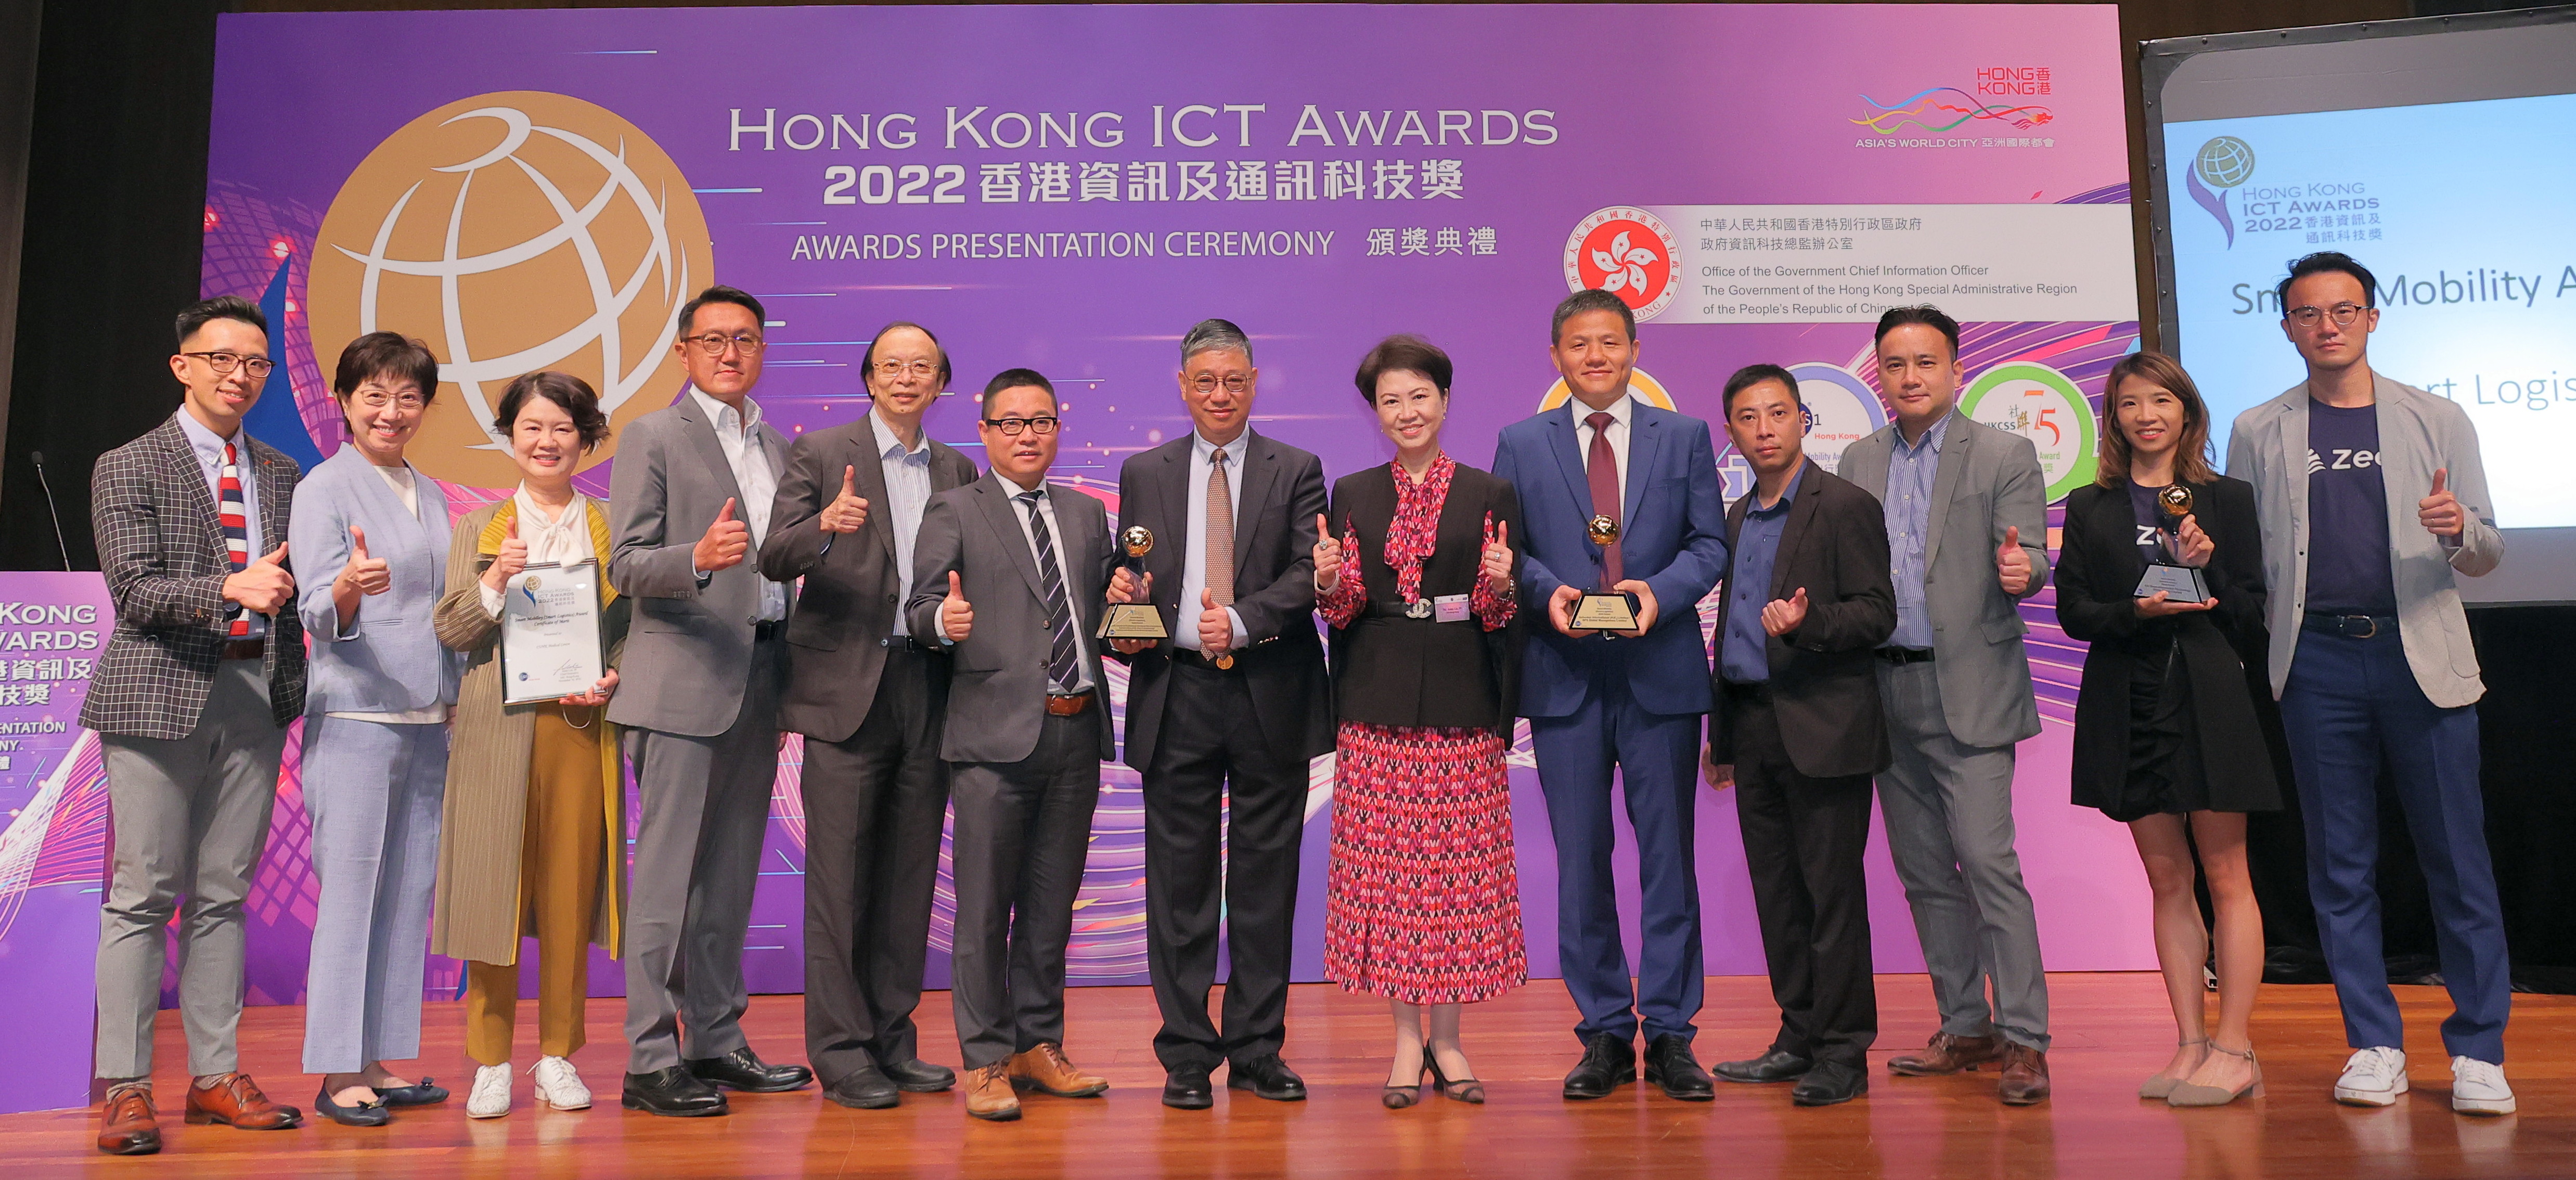 ICT award 2022 winners